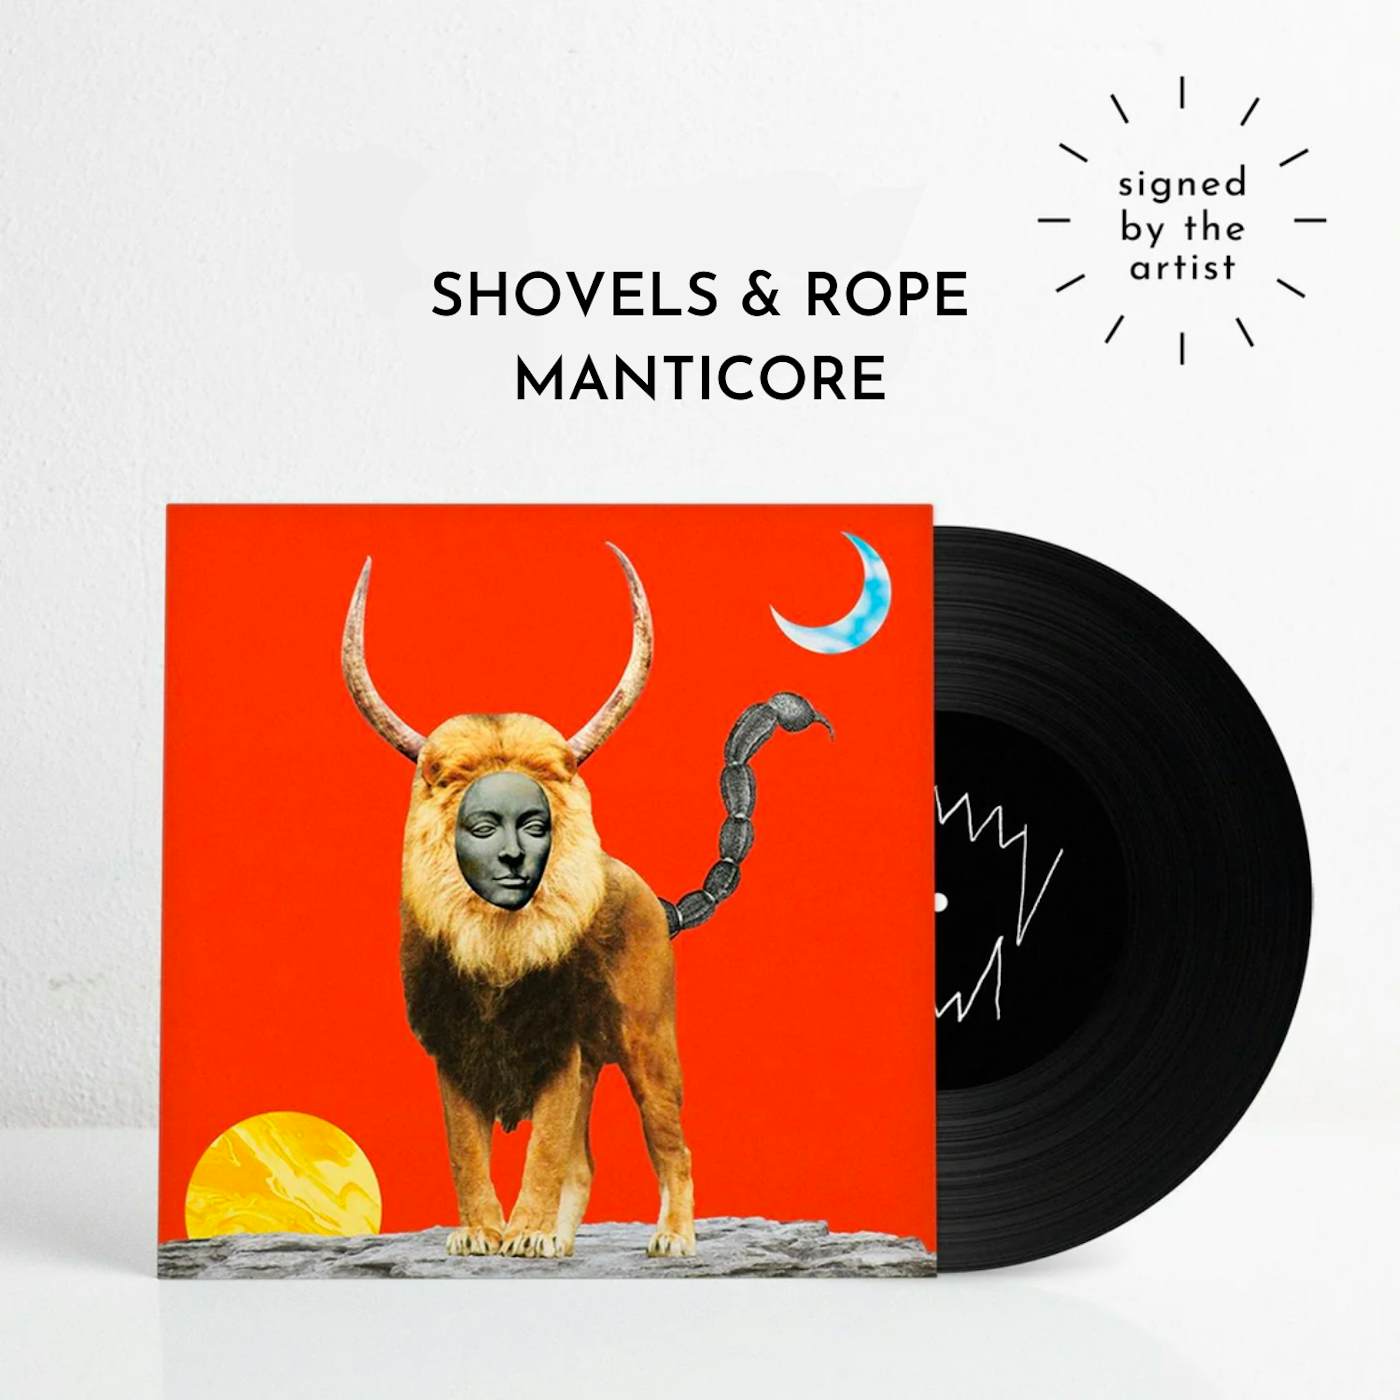 Shovels & Rope Manticore (Signed Vinyl)